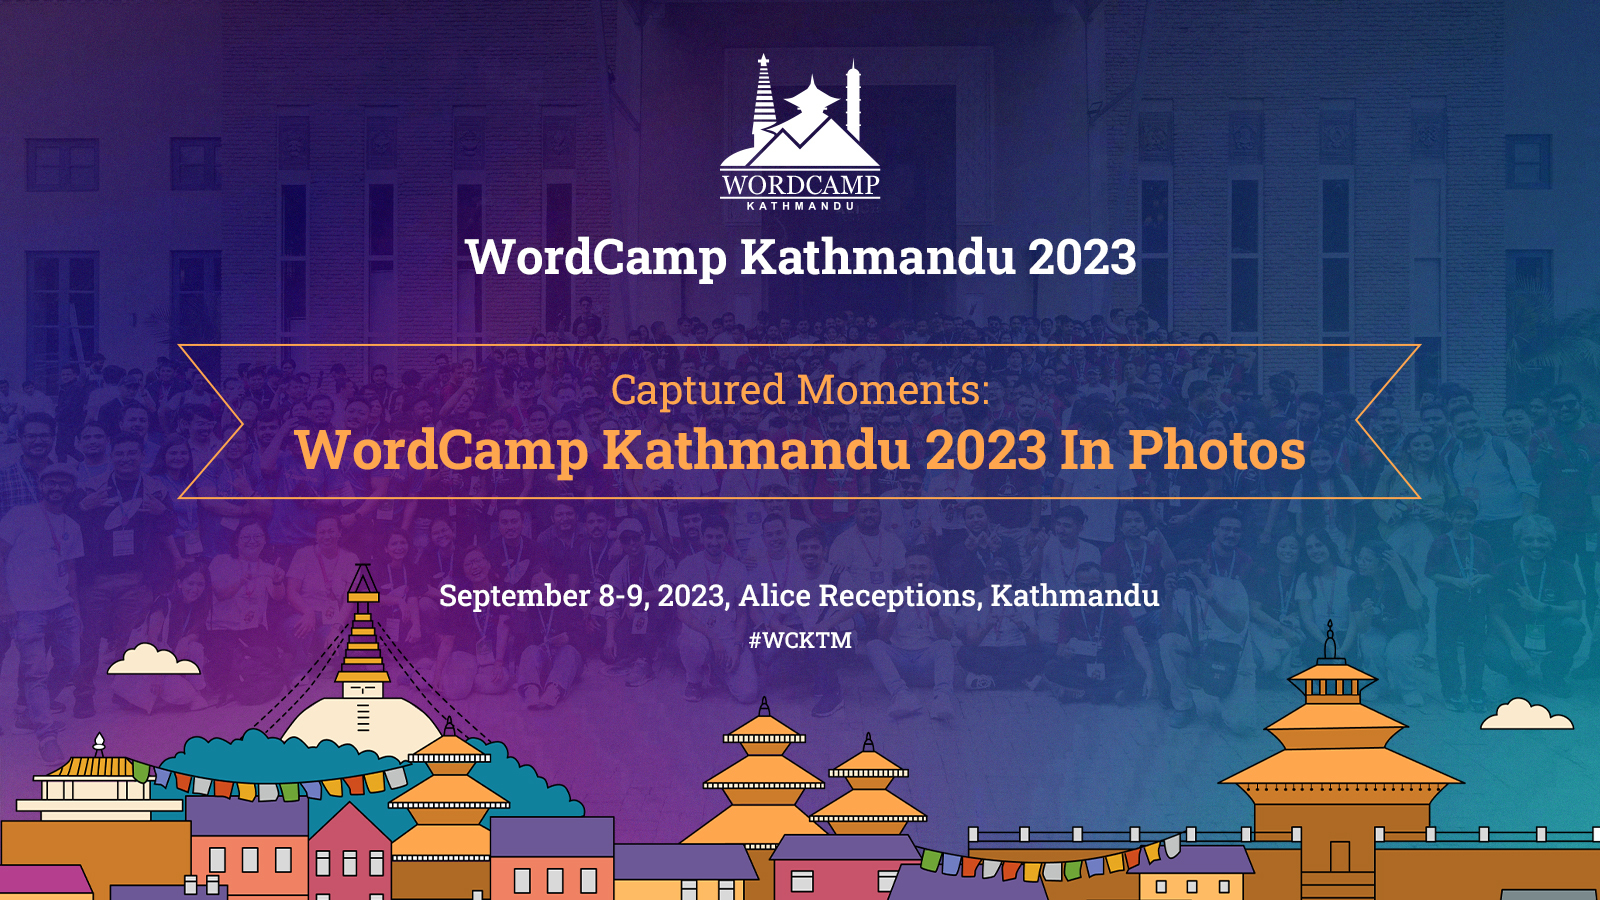 WordCamp Kathmandu 2023 in Photos